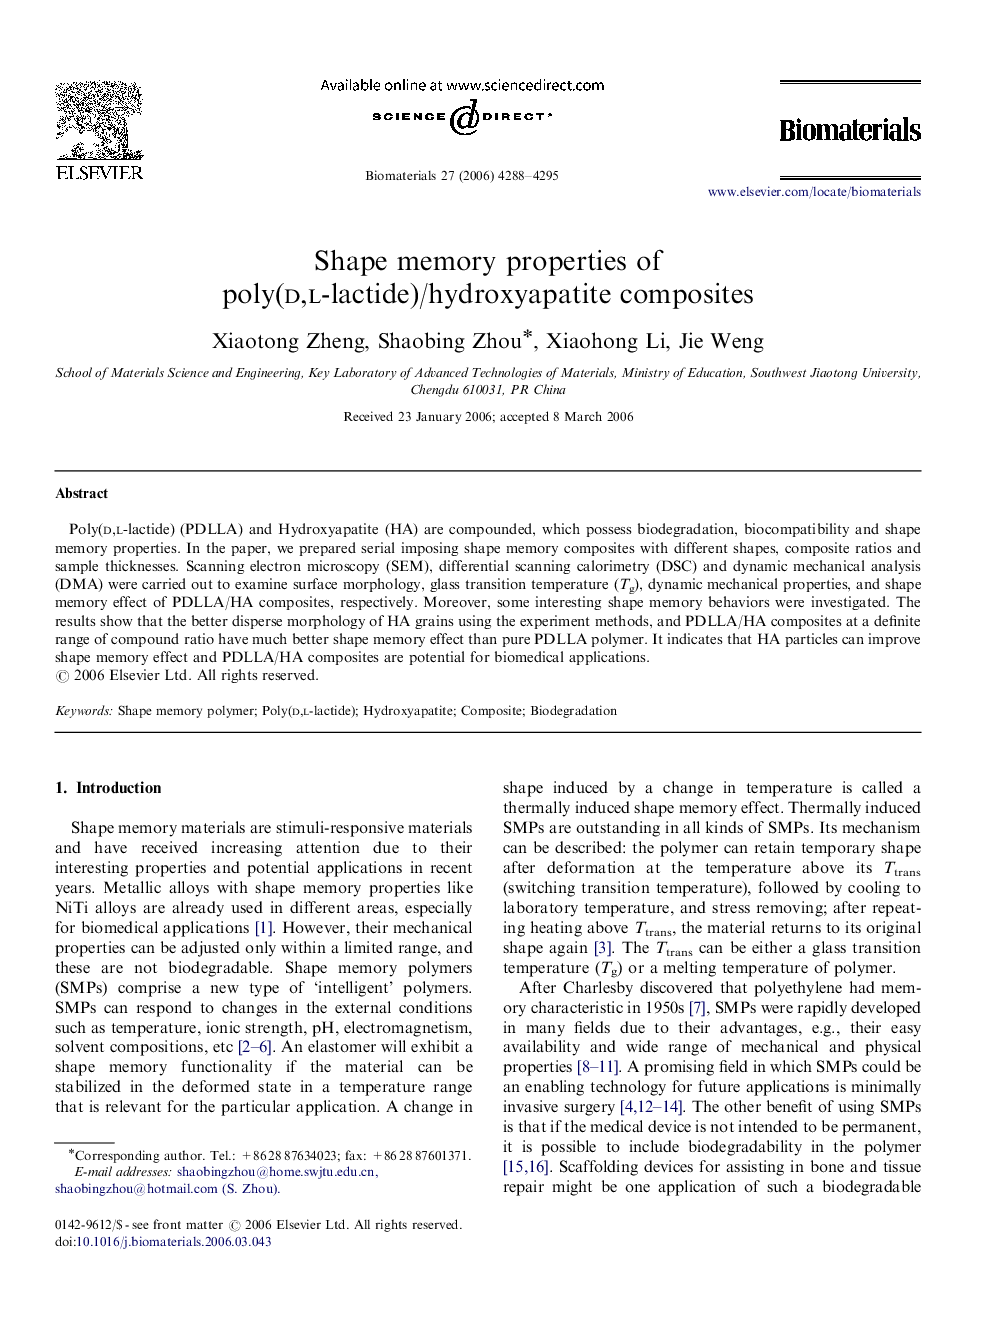 Shape memory properties of poly(d,l-lactide)/hydroxyapatite composites